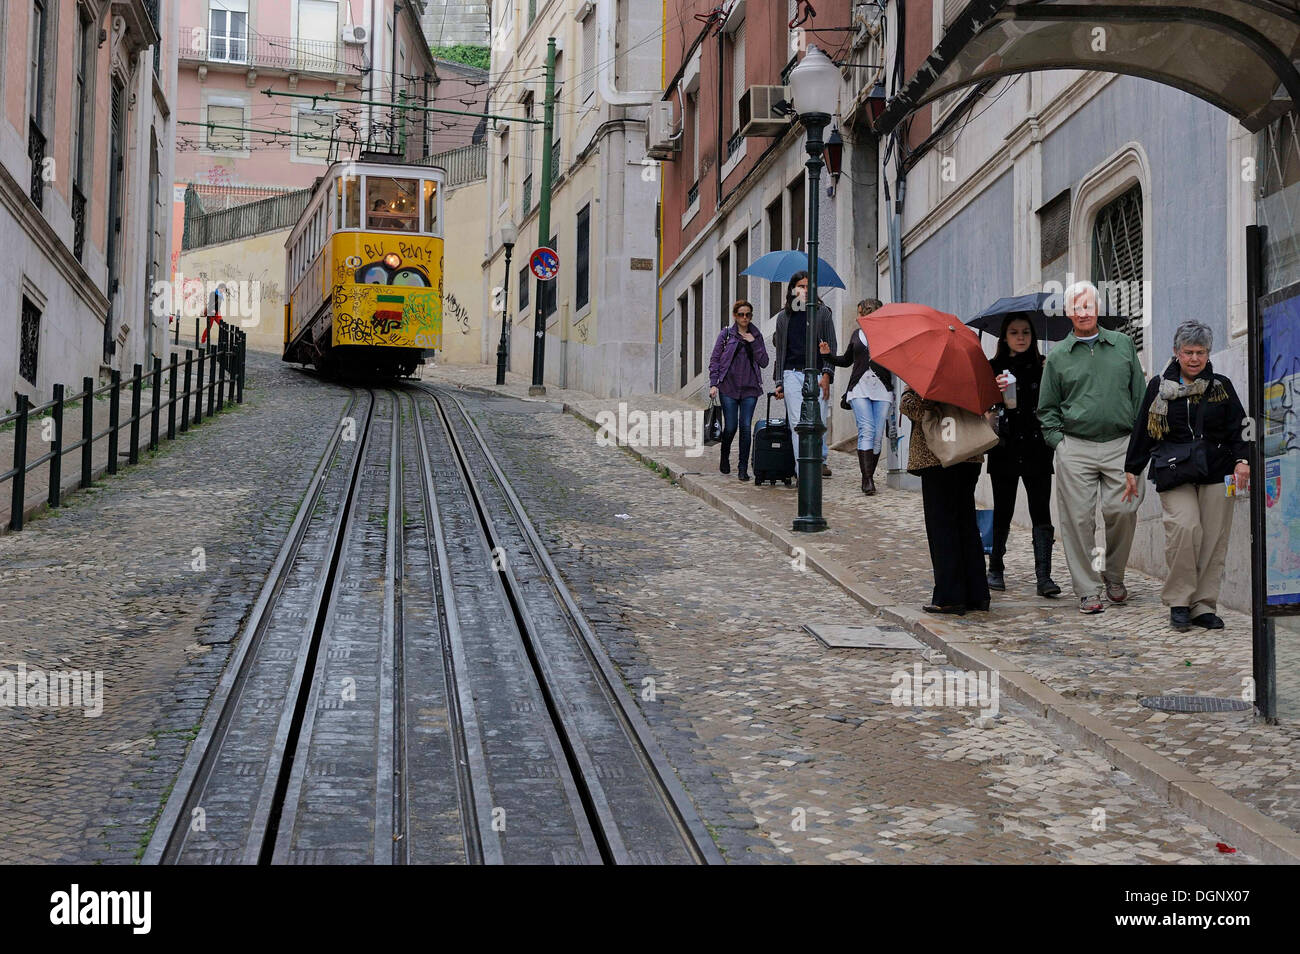 Elevador da Lavra, die älteste Standseilbahn Europas Stadt, Lissabon, Portugal, Stockfoto